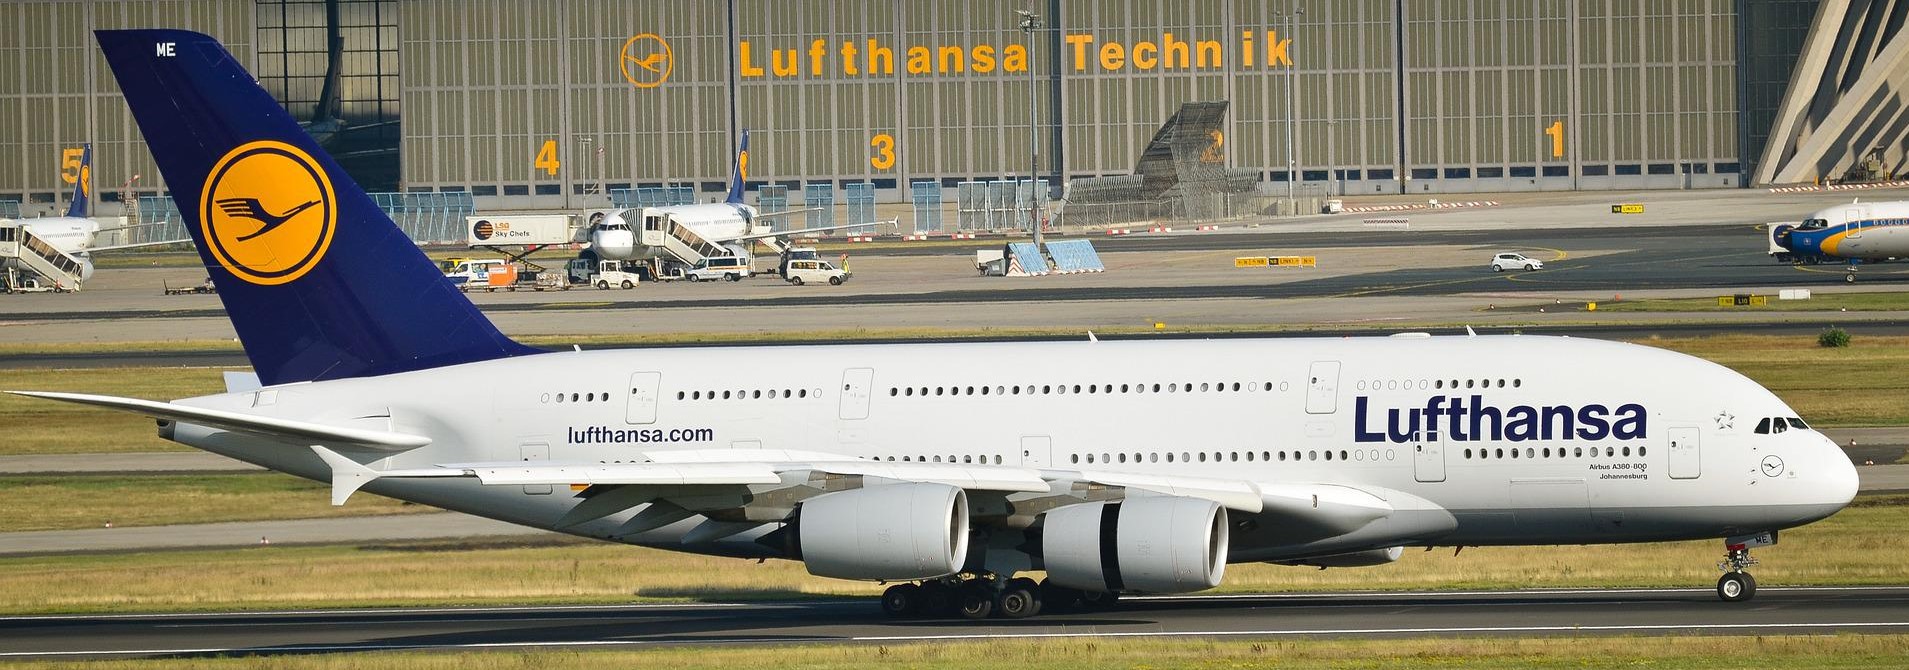 Lufthansa Corporate Name